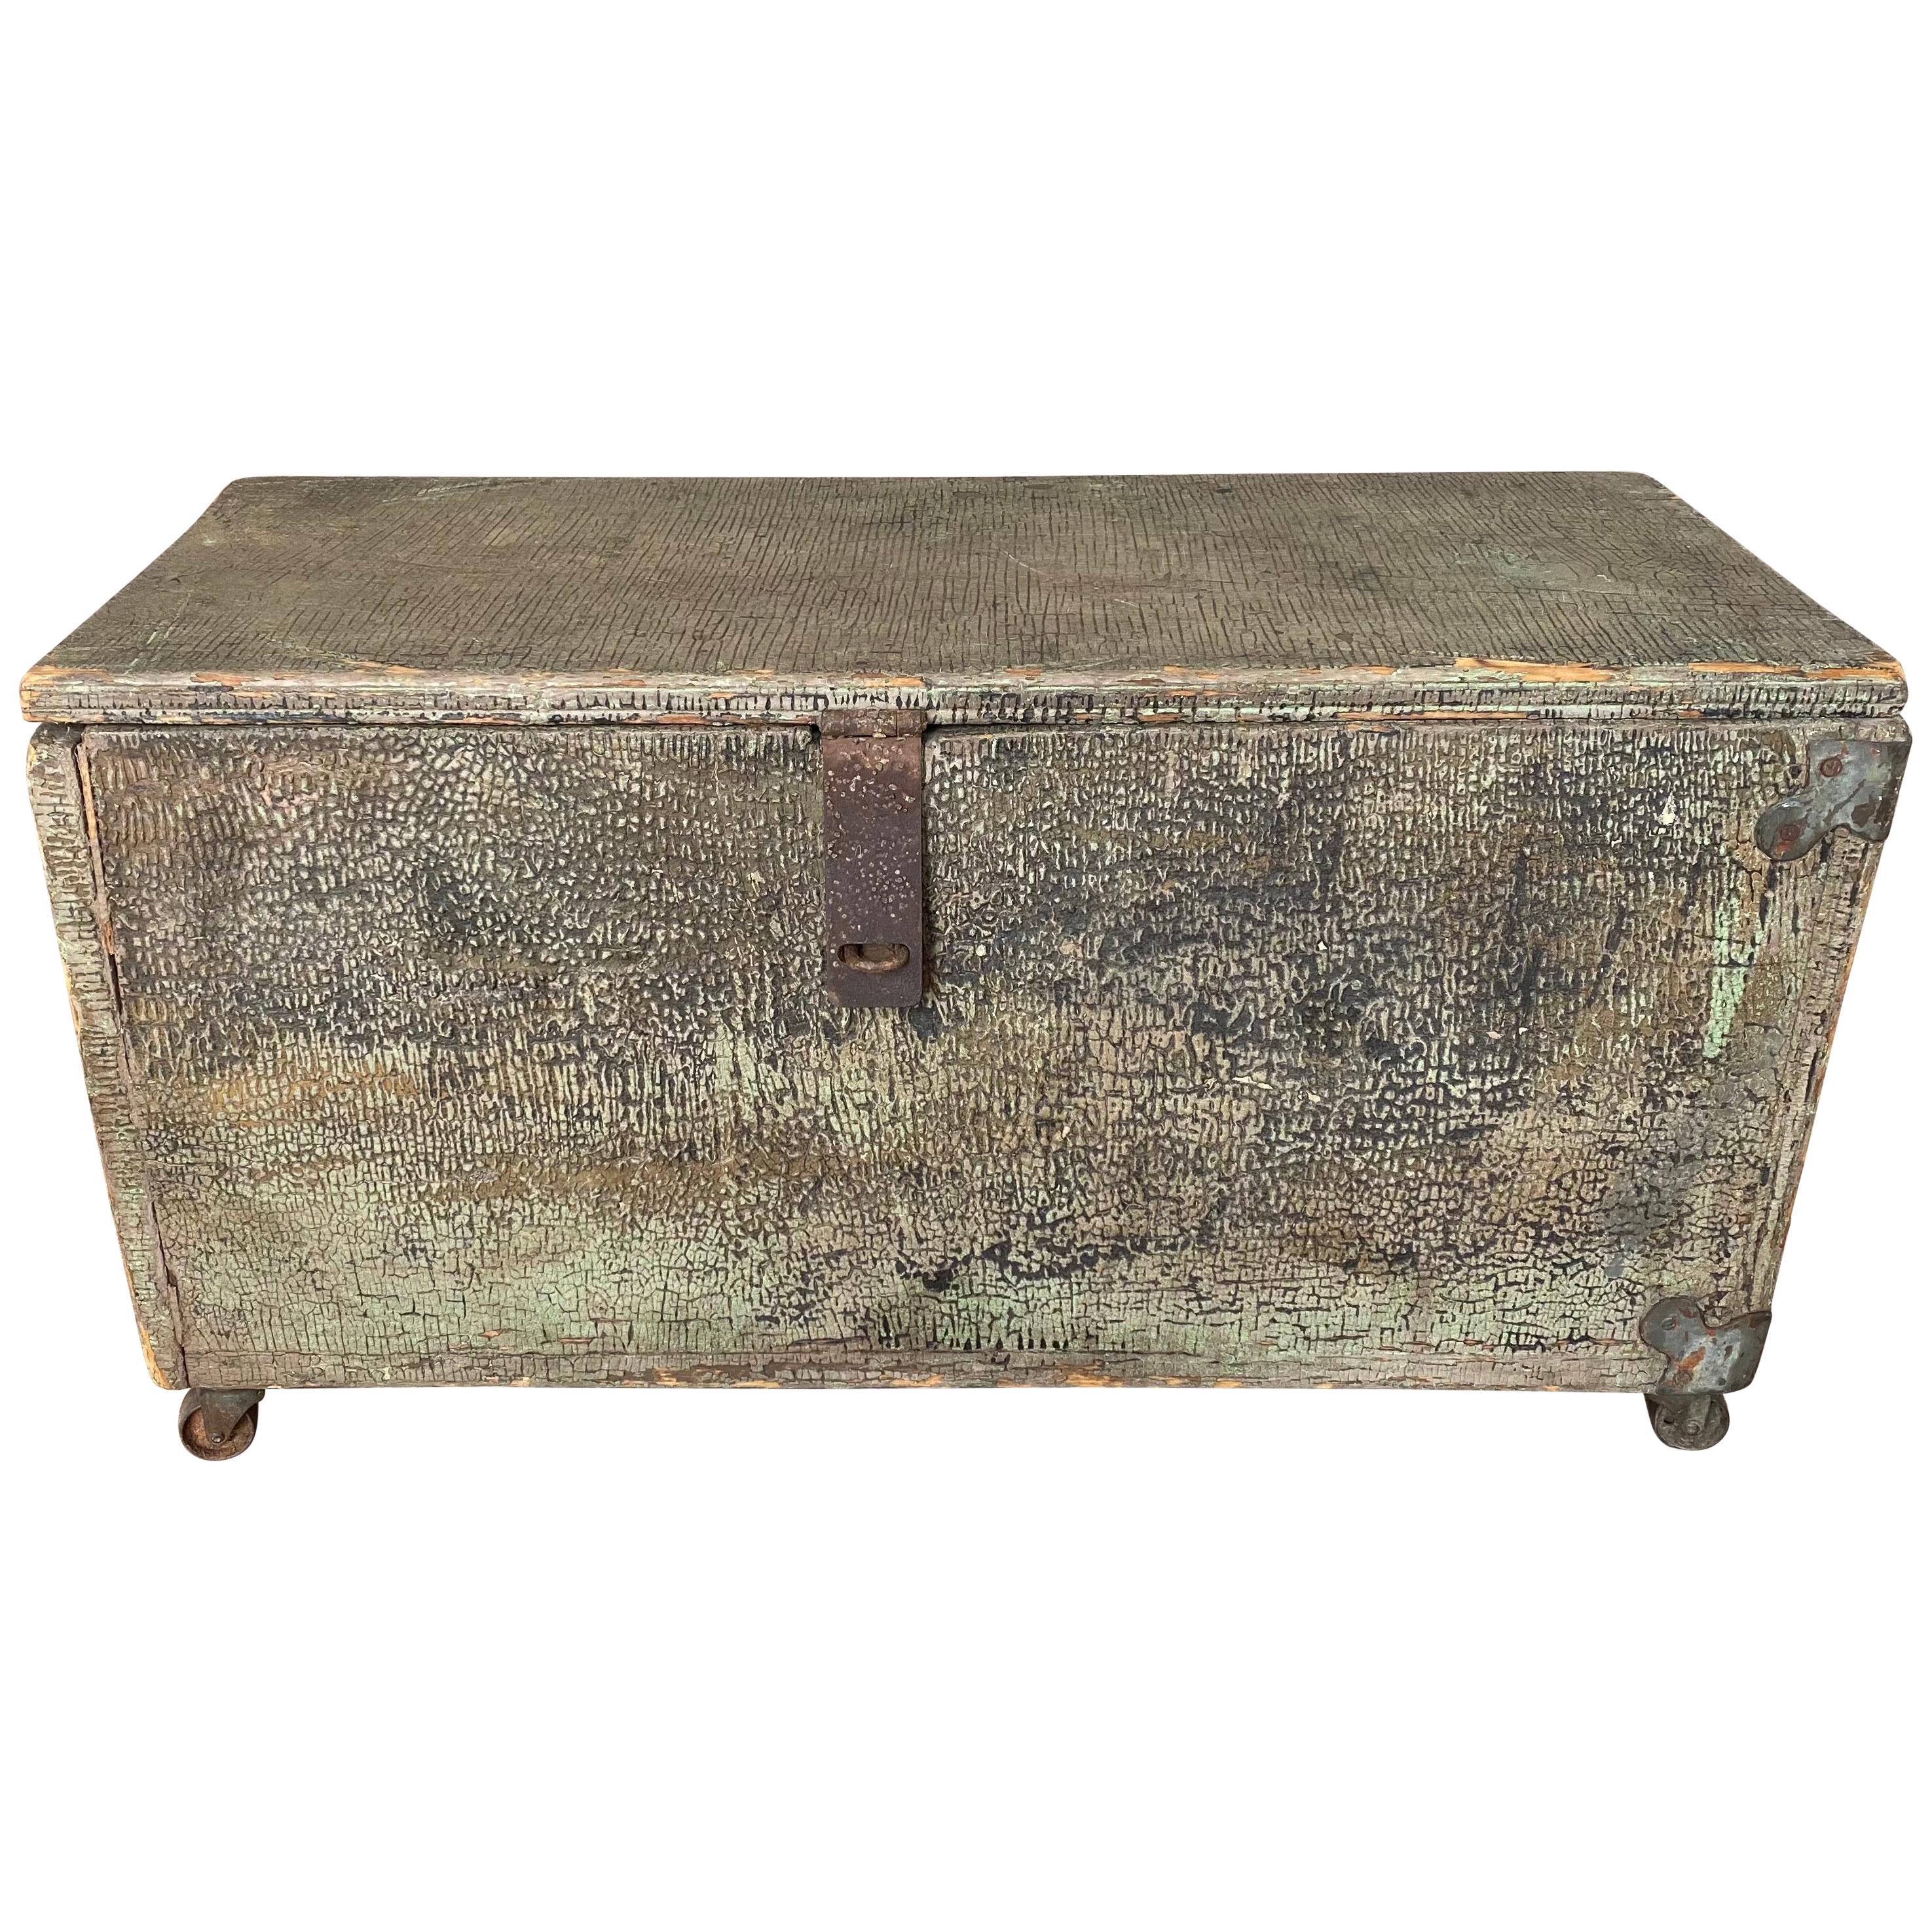 19th Century American Box on Castors